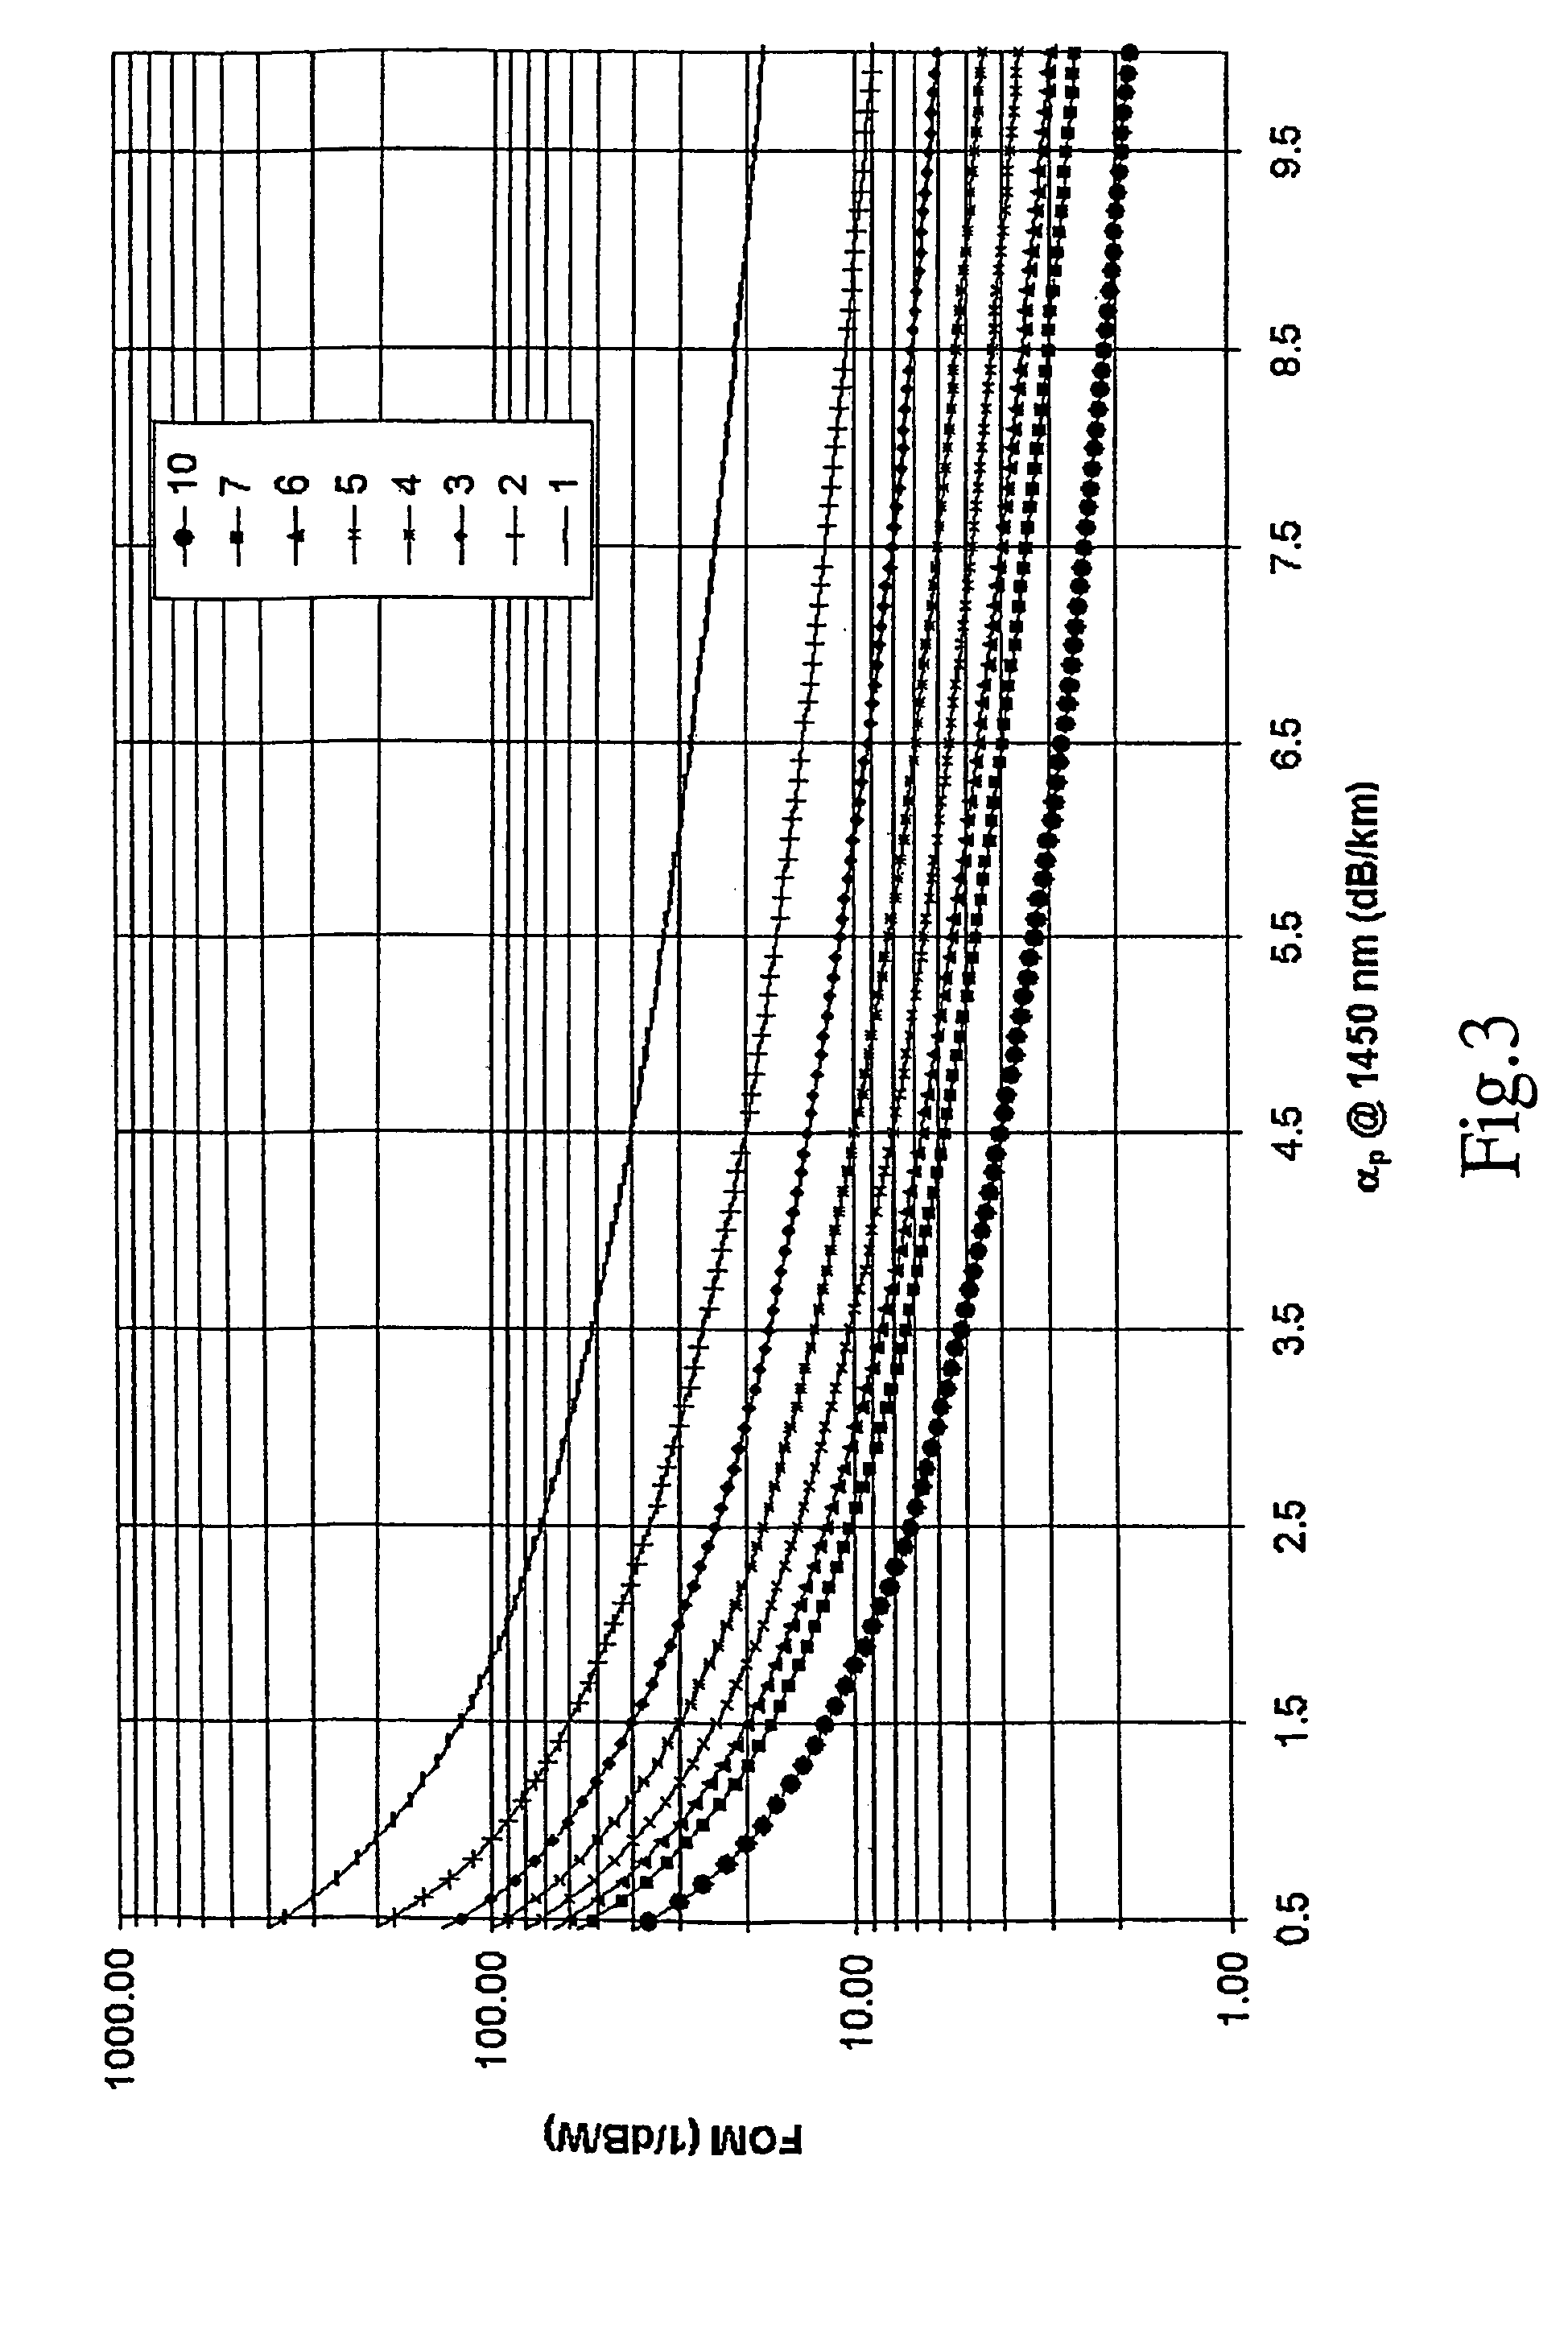 Raman amplification using a microstructured fiber